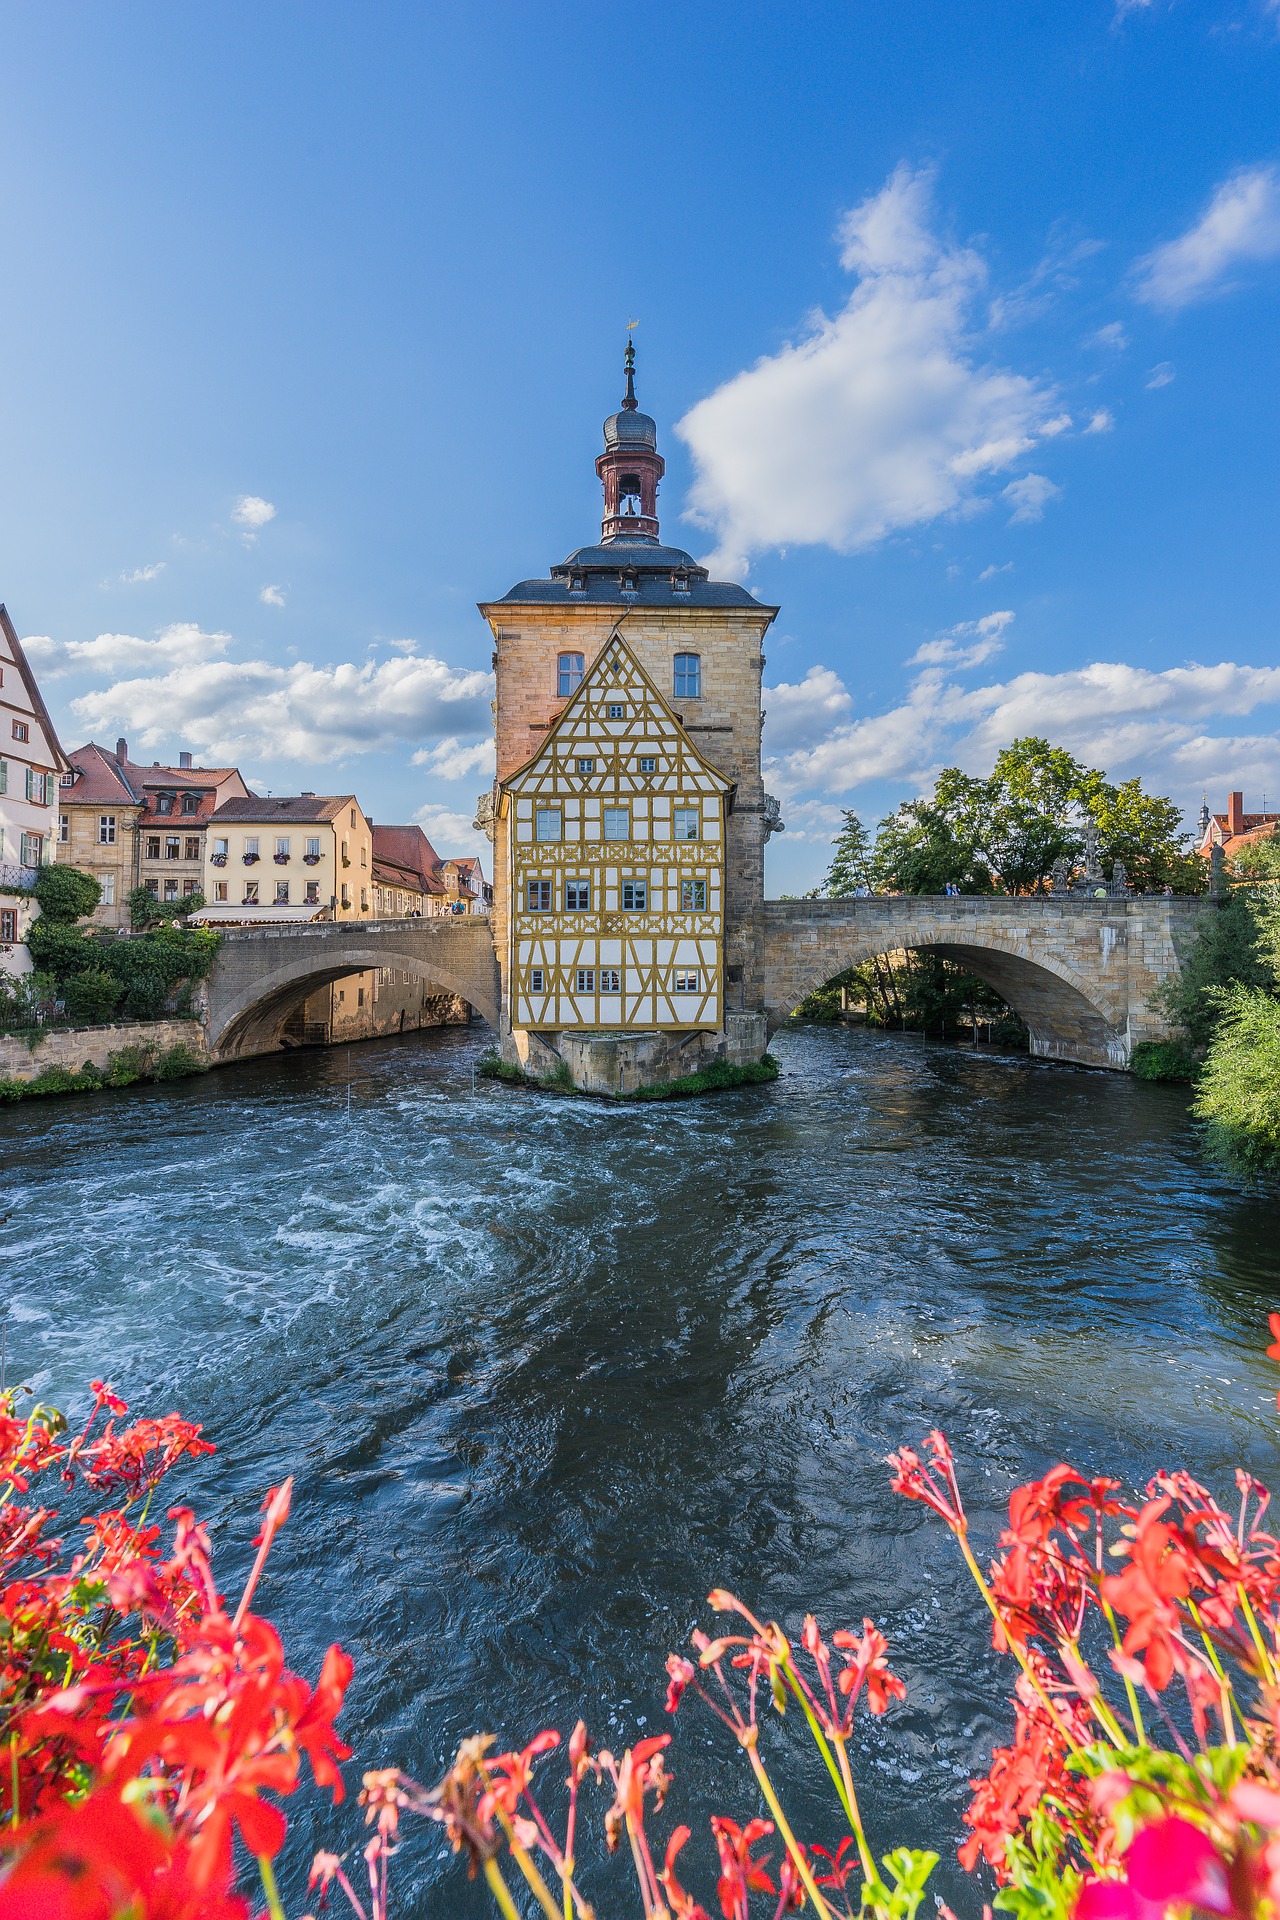 The Most Romantic Honeymoon Destinations In Germany Perevod pesni honeymoon — reyting: most romantic honeymoon destinations